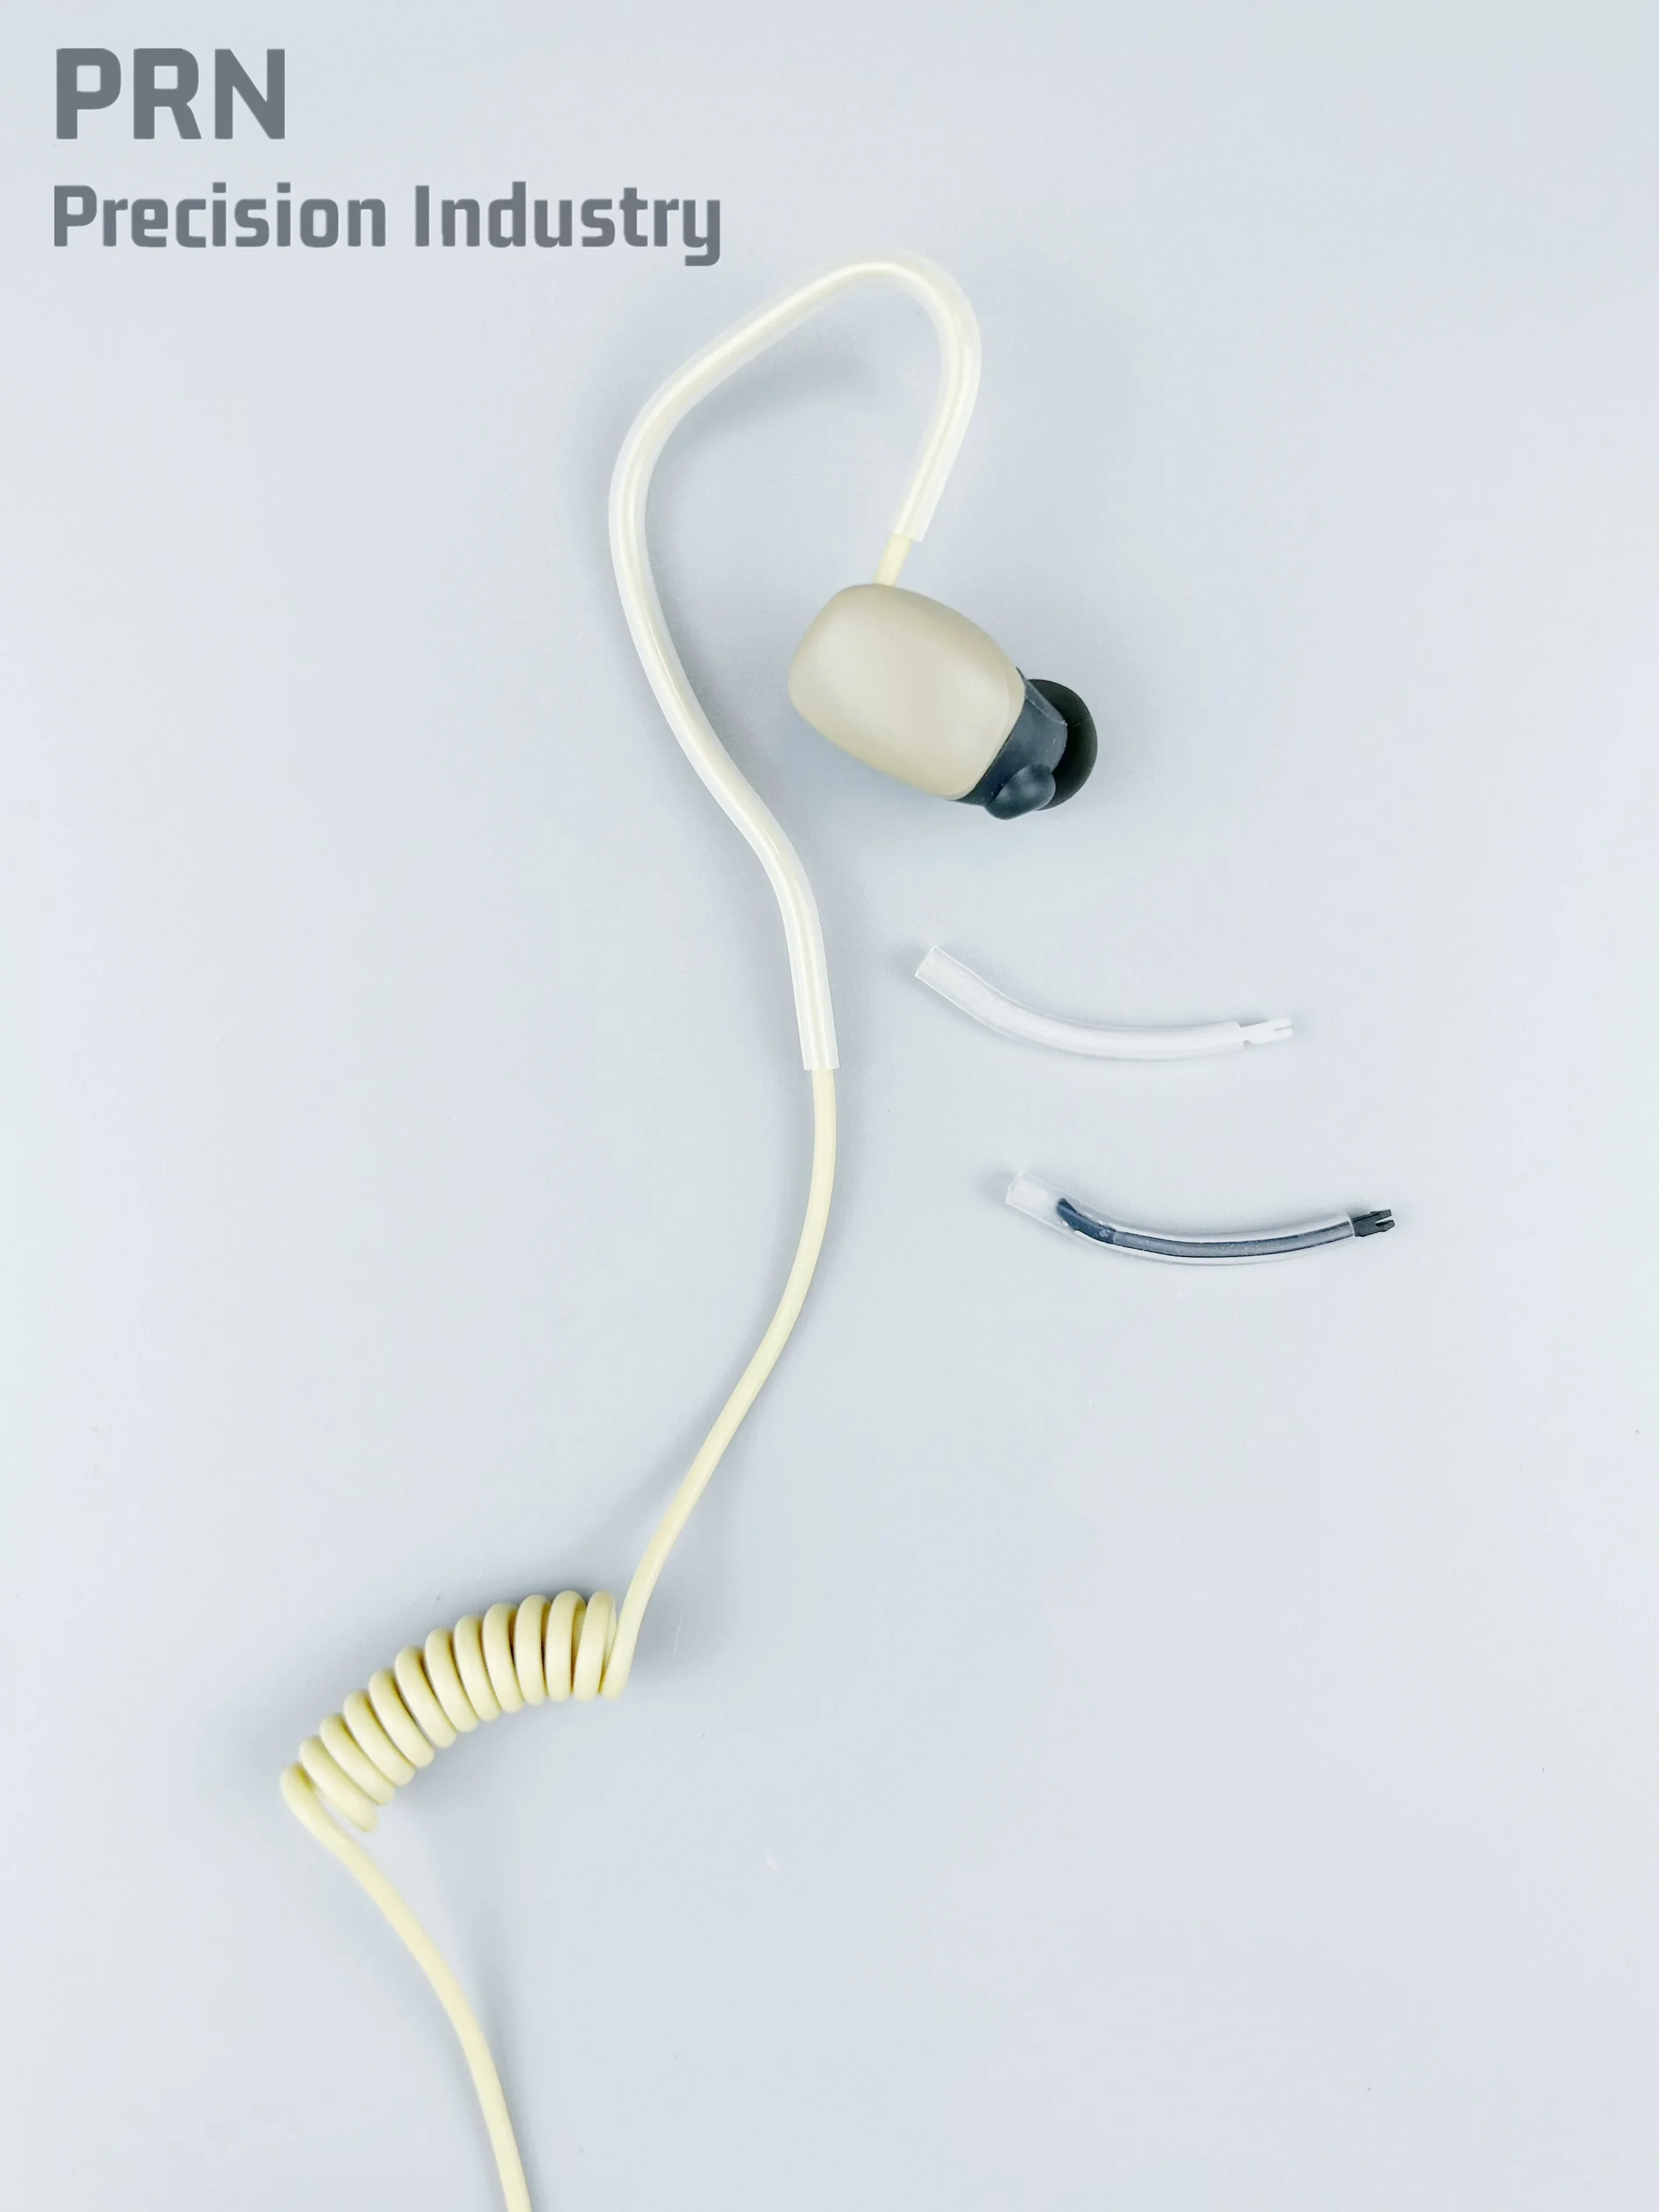 Ушите Seiko INVISIO M3 с костна проводимост с пясъчен цвят с четырехсекционным приставка адаптер Изображение 2